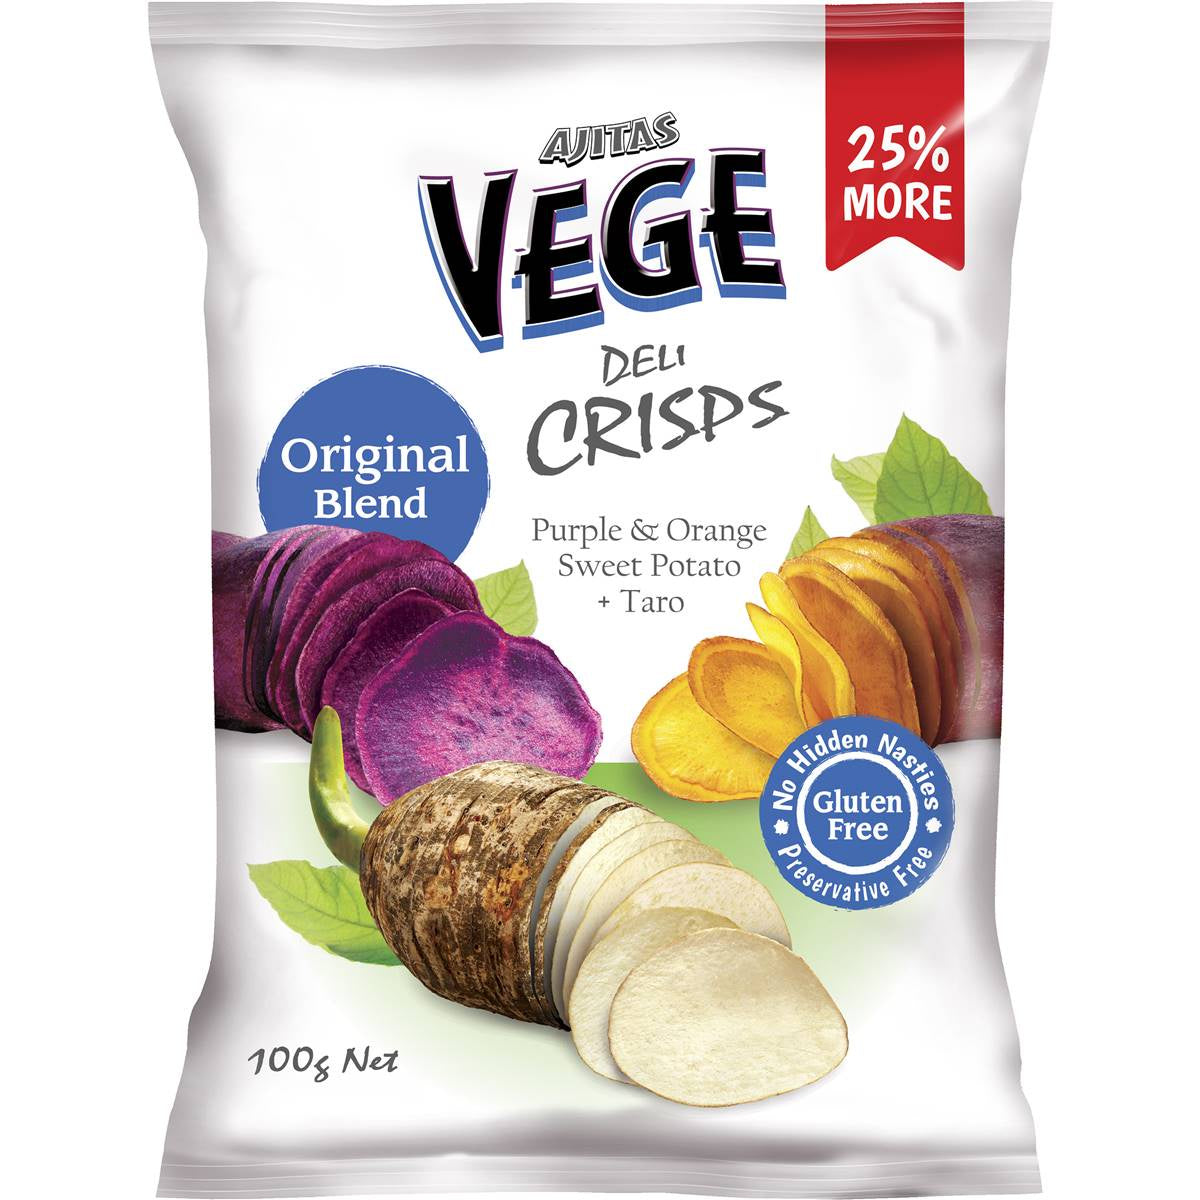 Vege Chips Deli Crisp Original Gluten Free 100g